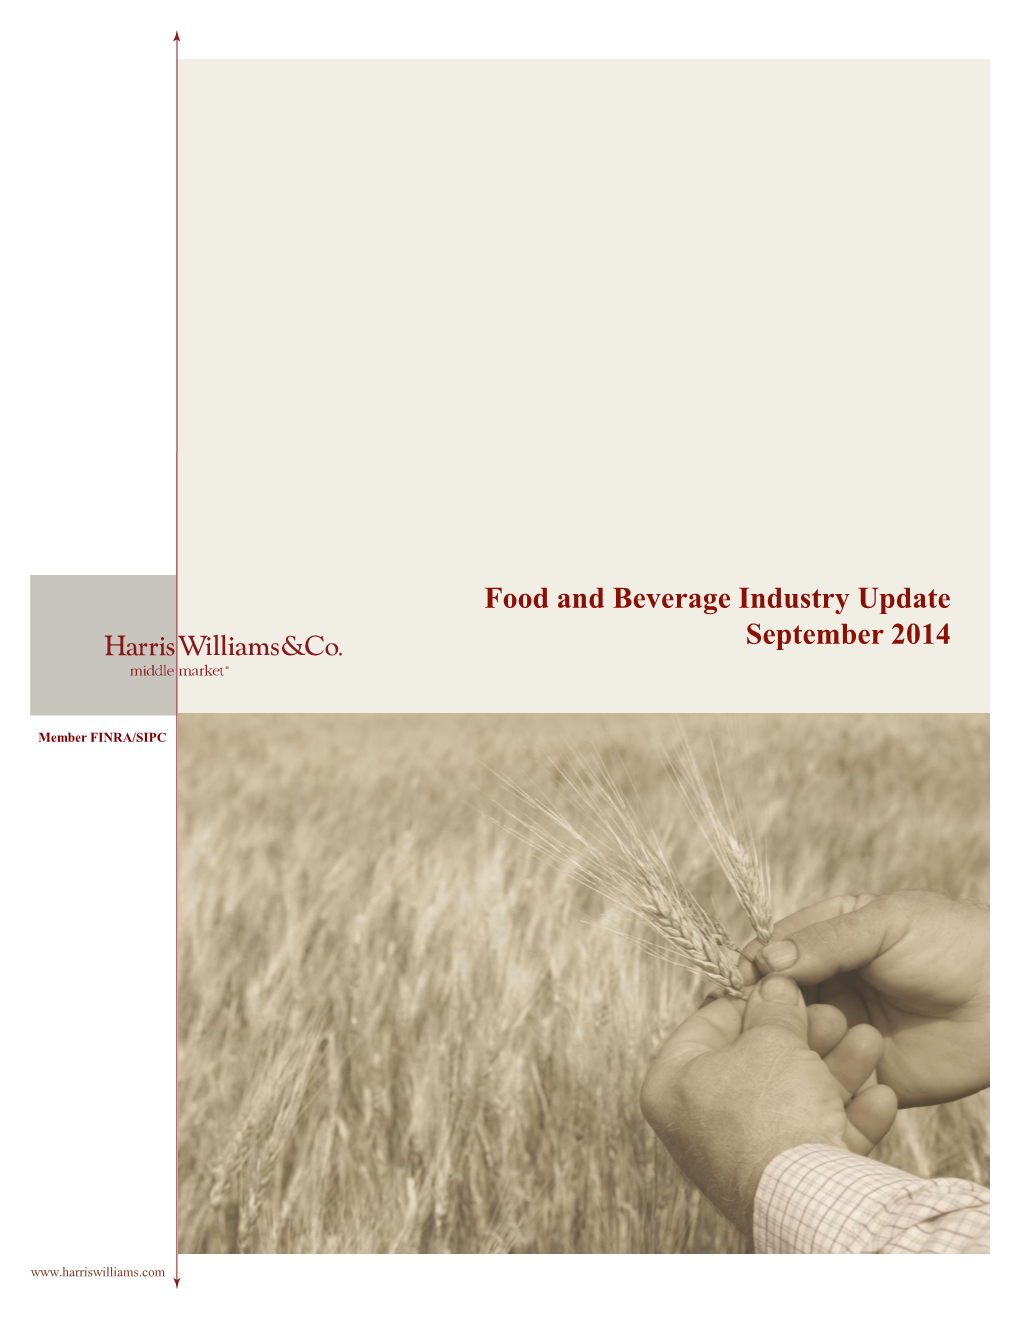 Food and Beverage Industry Update September 2014